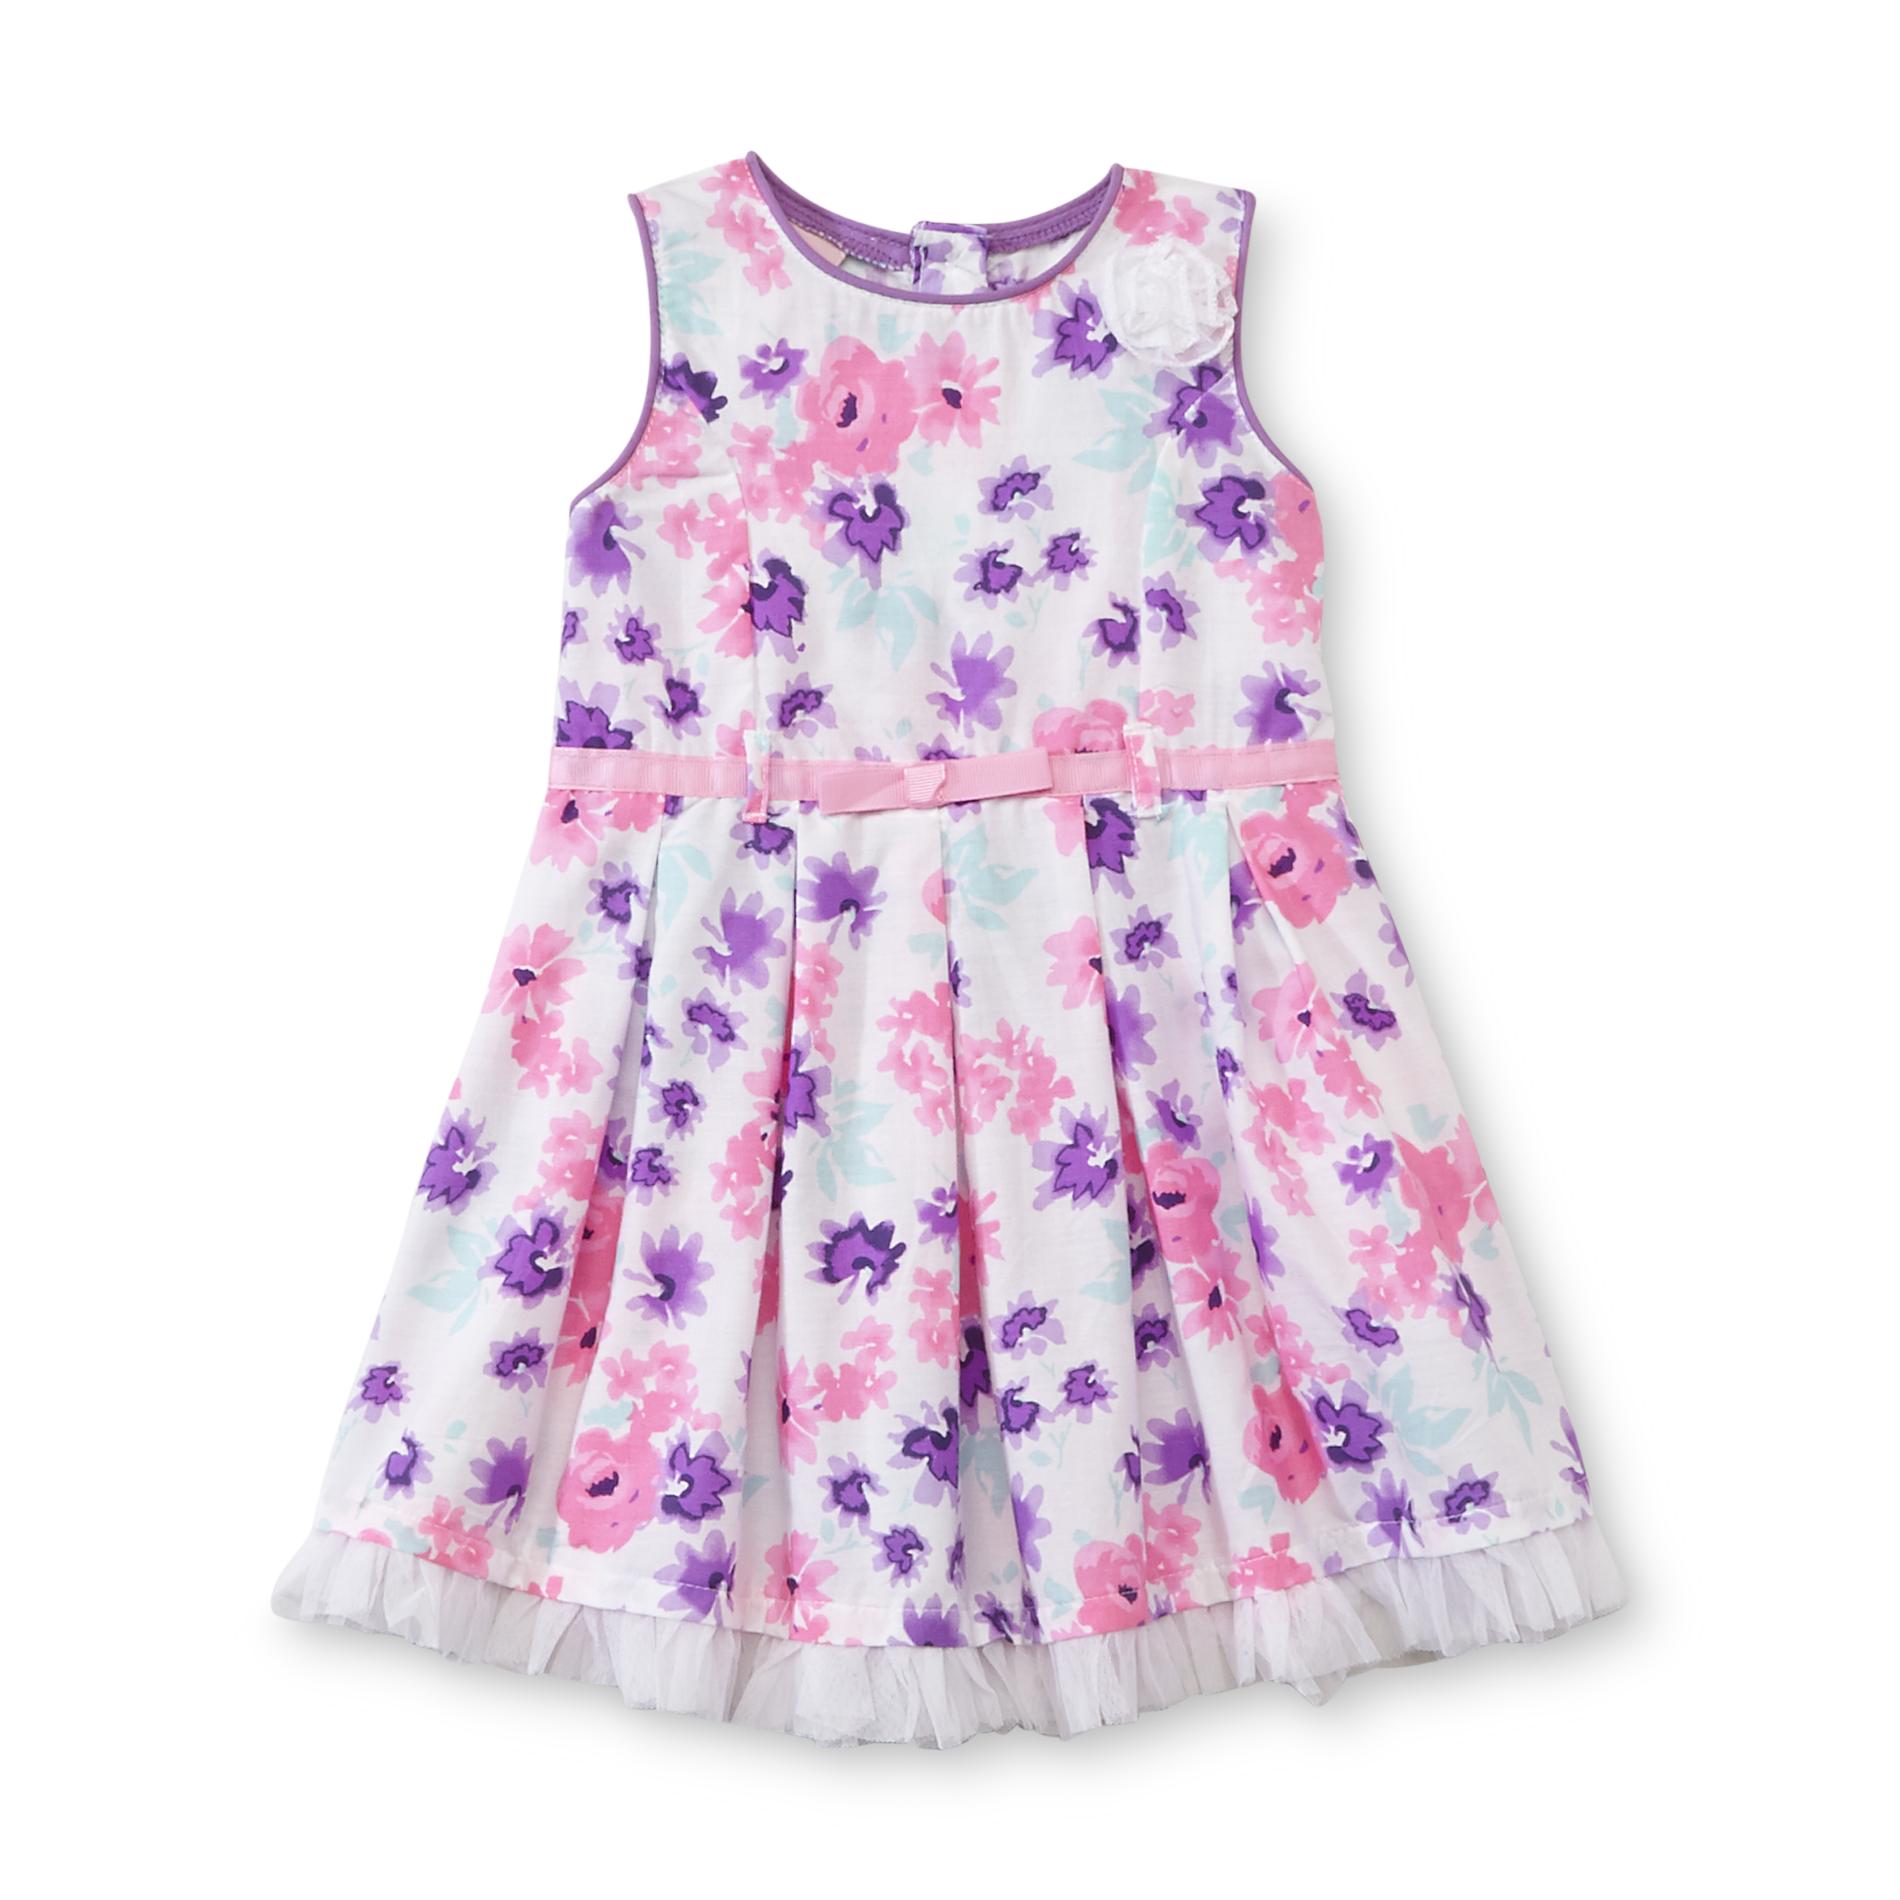 Little Lass Infant Girl's Pleated Dress - Floral